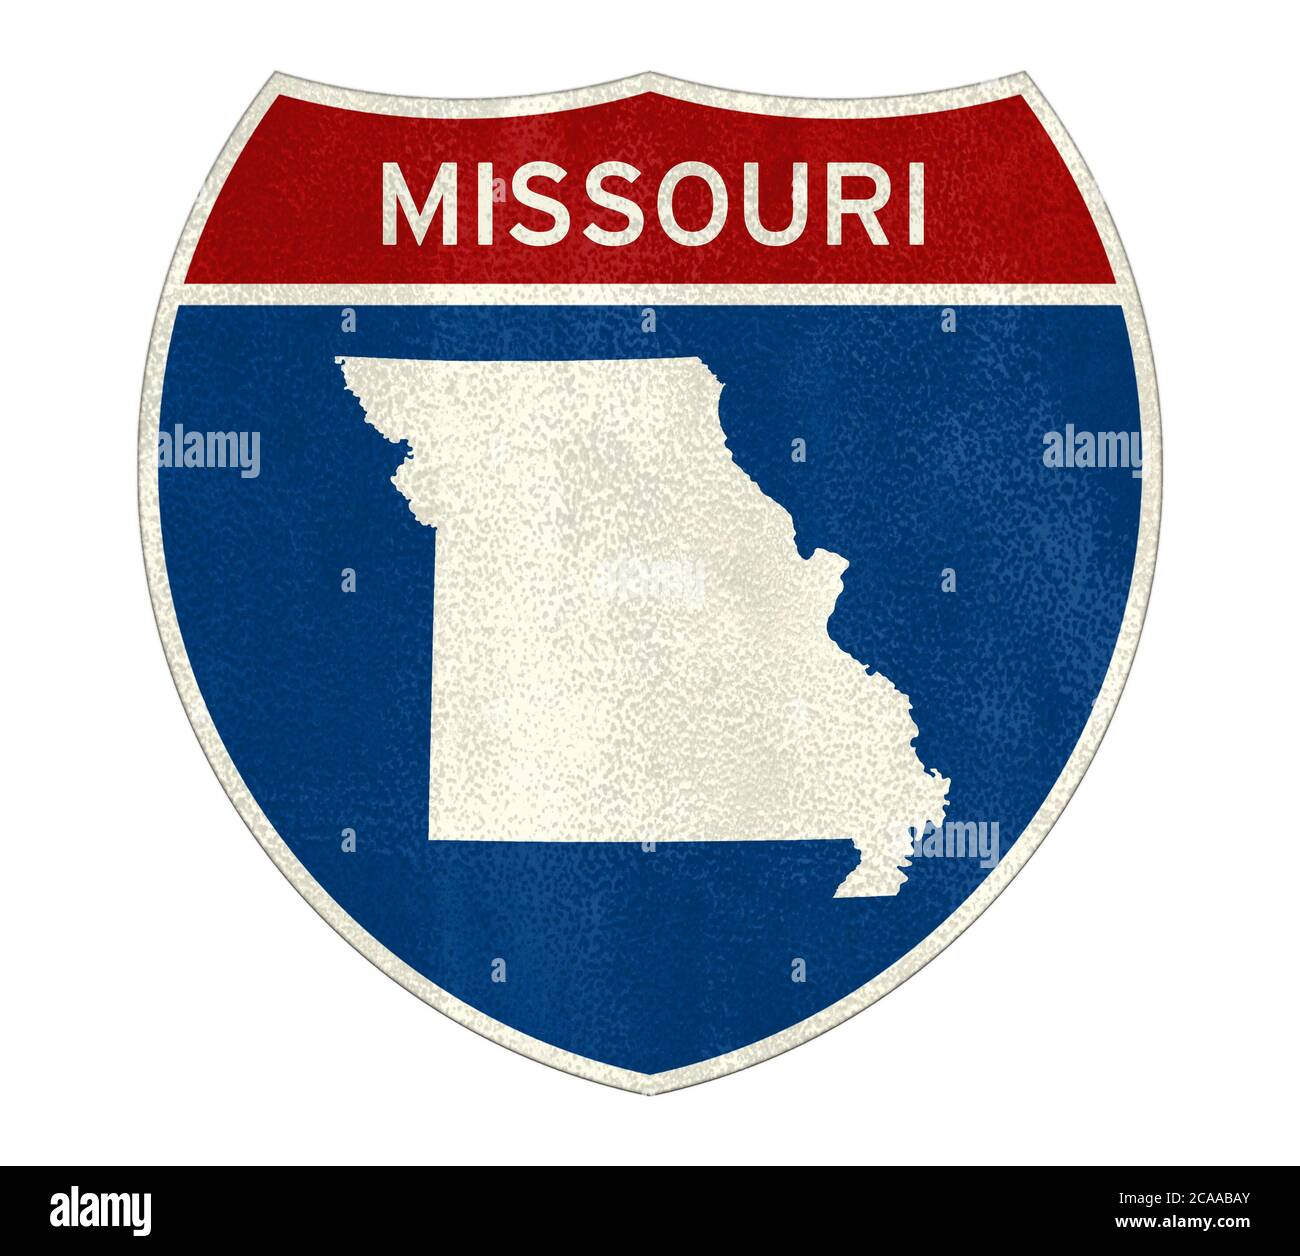 Missouri State - interstate road sign Stock Photo